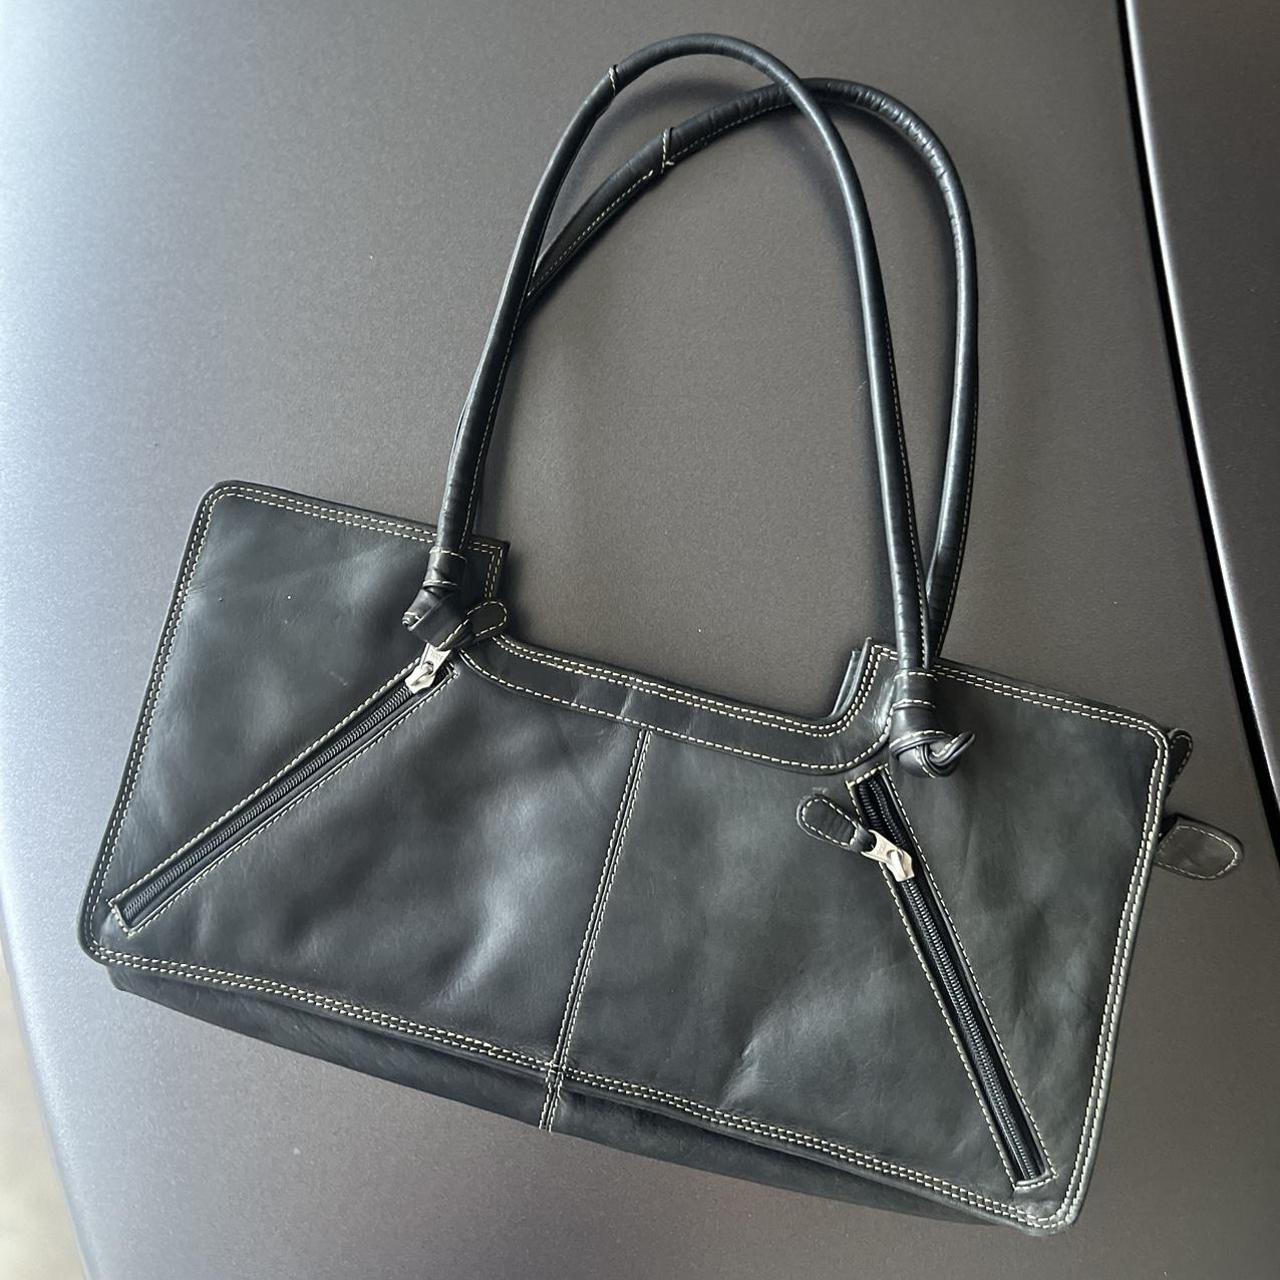 Chaos Leather purse Light Brown Shoulder Bag 6 Pockets. C2c | eBay